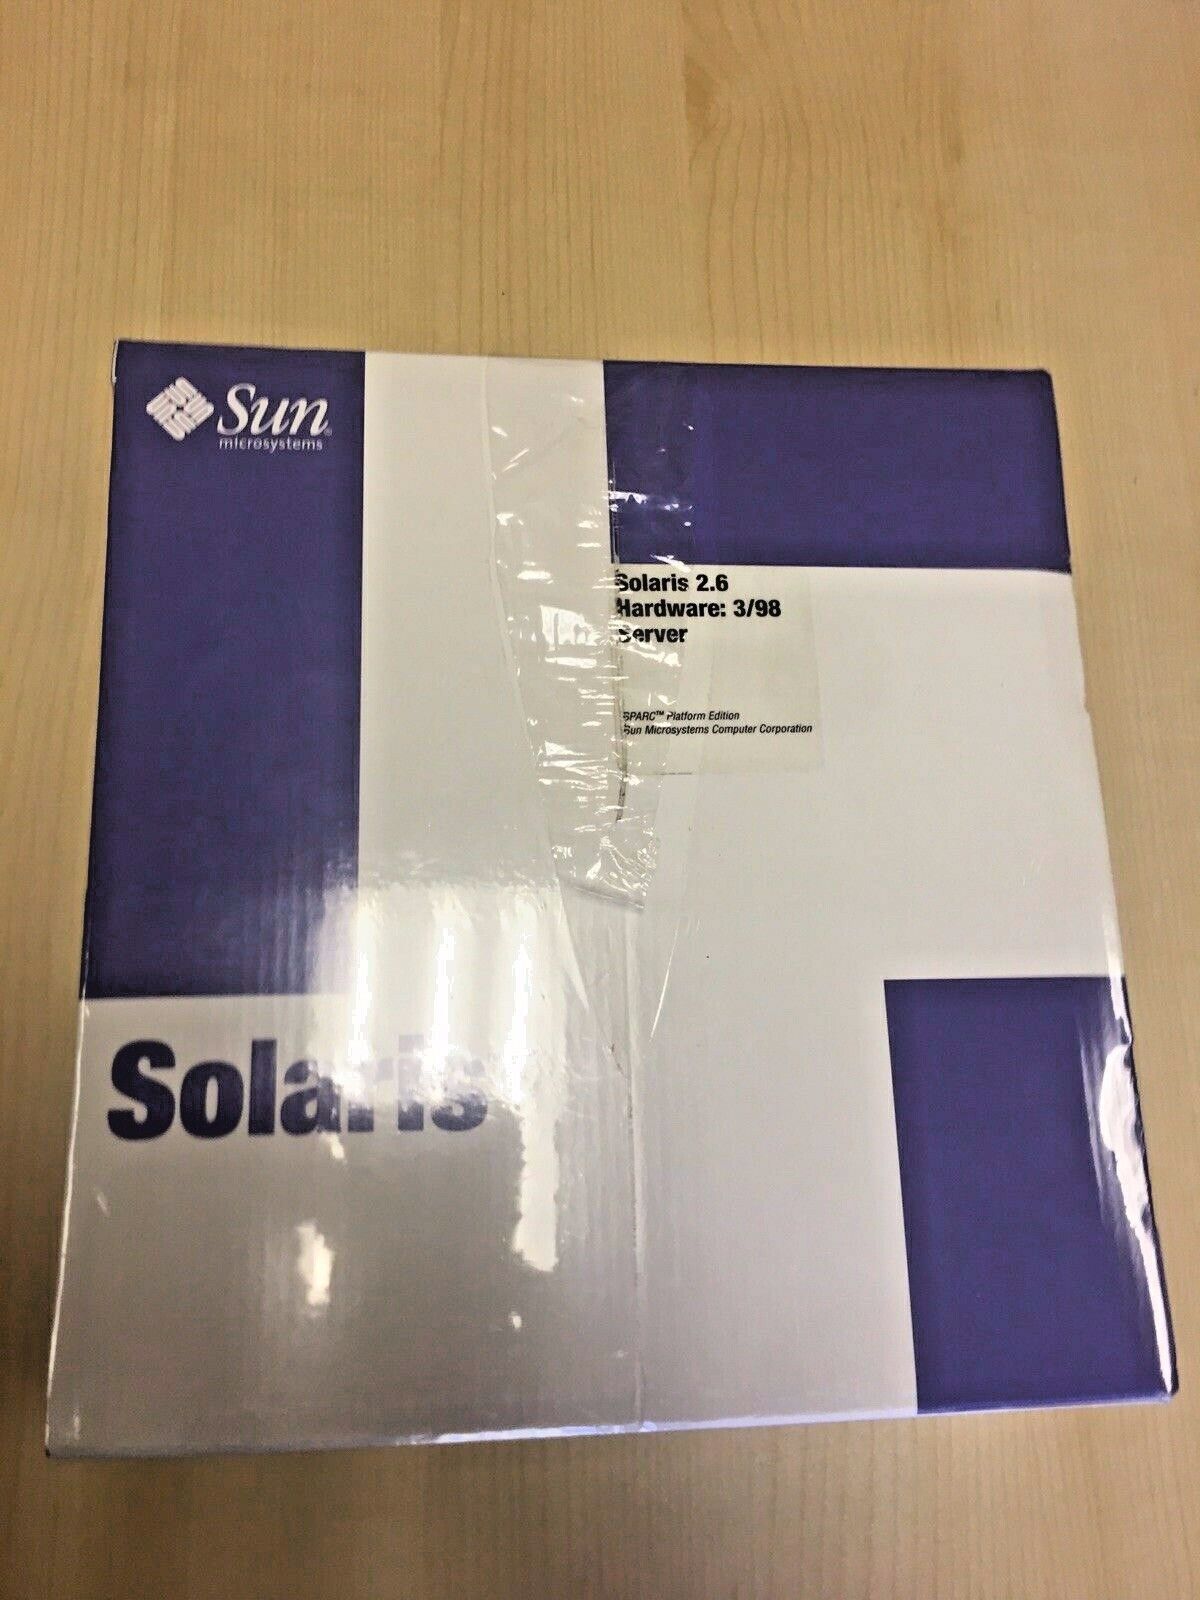 Sun MICRO SYS. Solaris 2.6 Hardware:3/98 Server Operating System P/N 798-0328-02